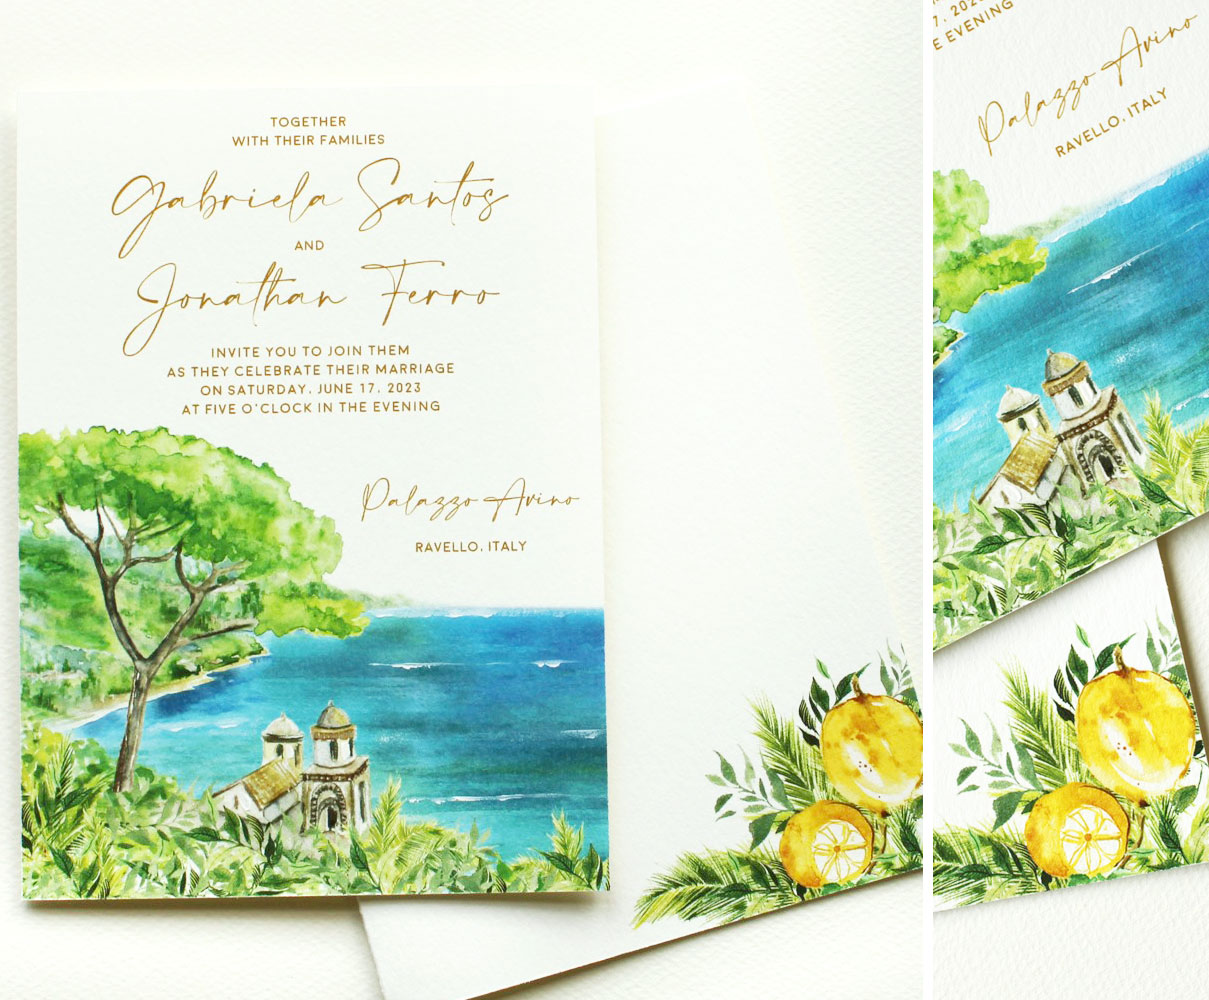 ravello-italy-wedding-invitations